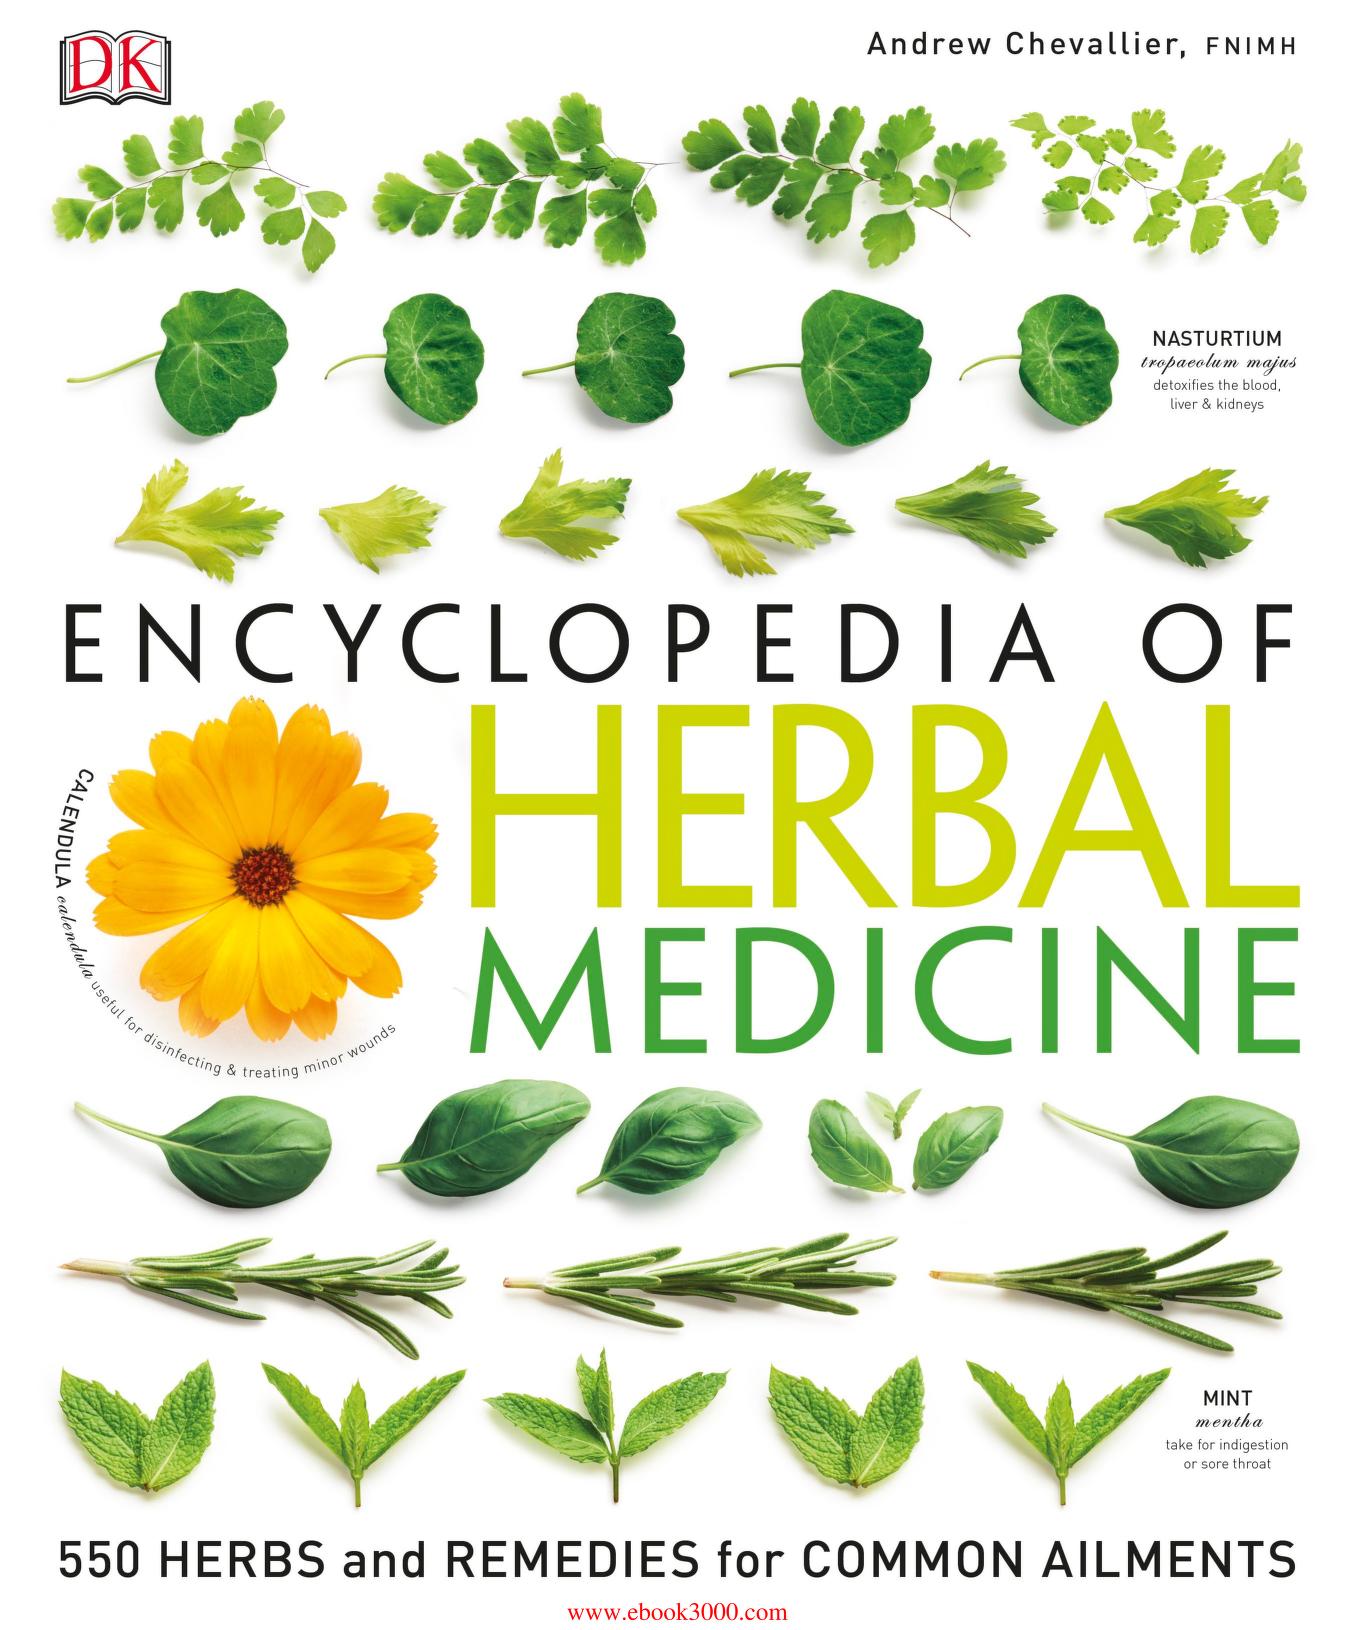 Medical herbalism pdf free download download google translate windows